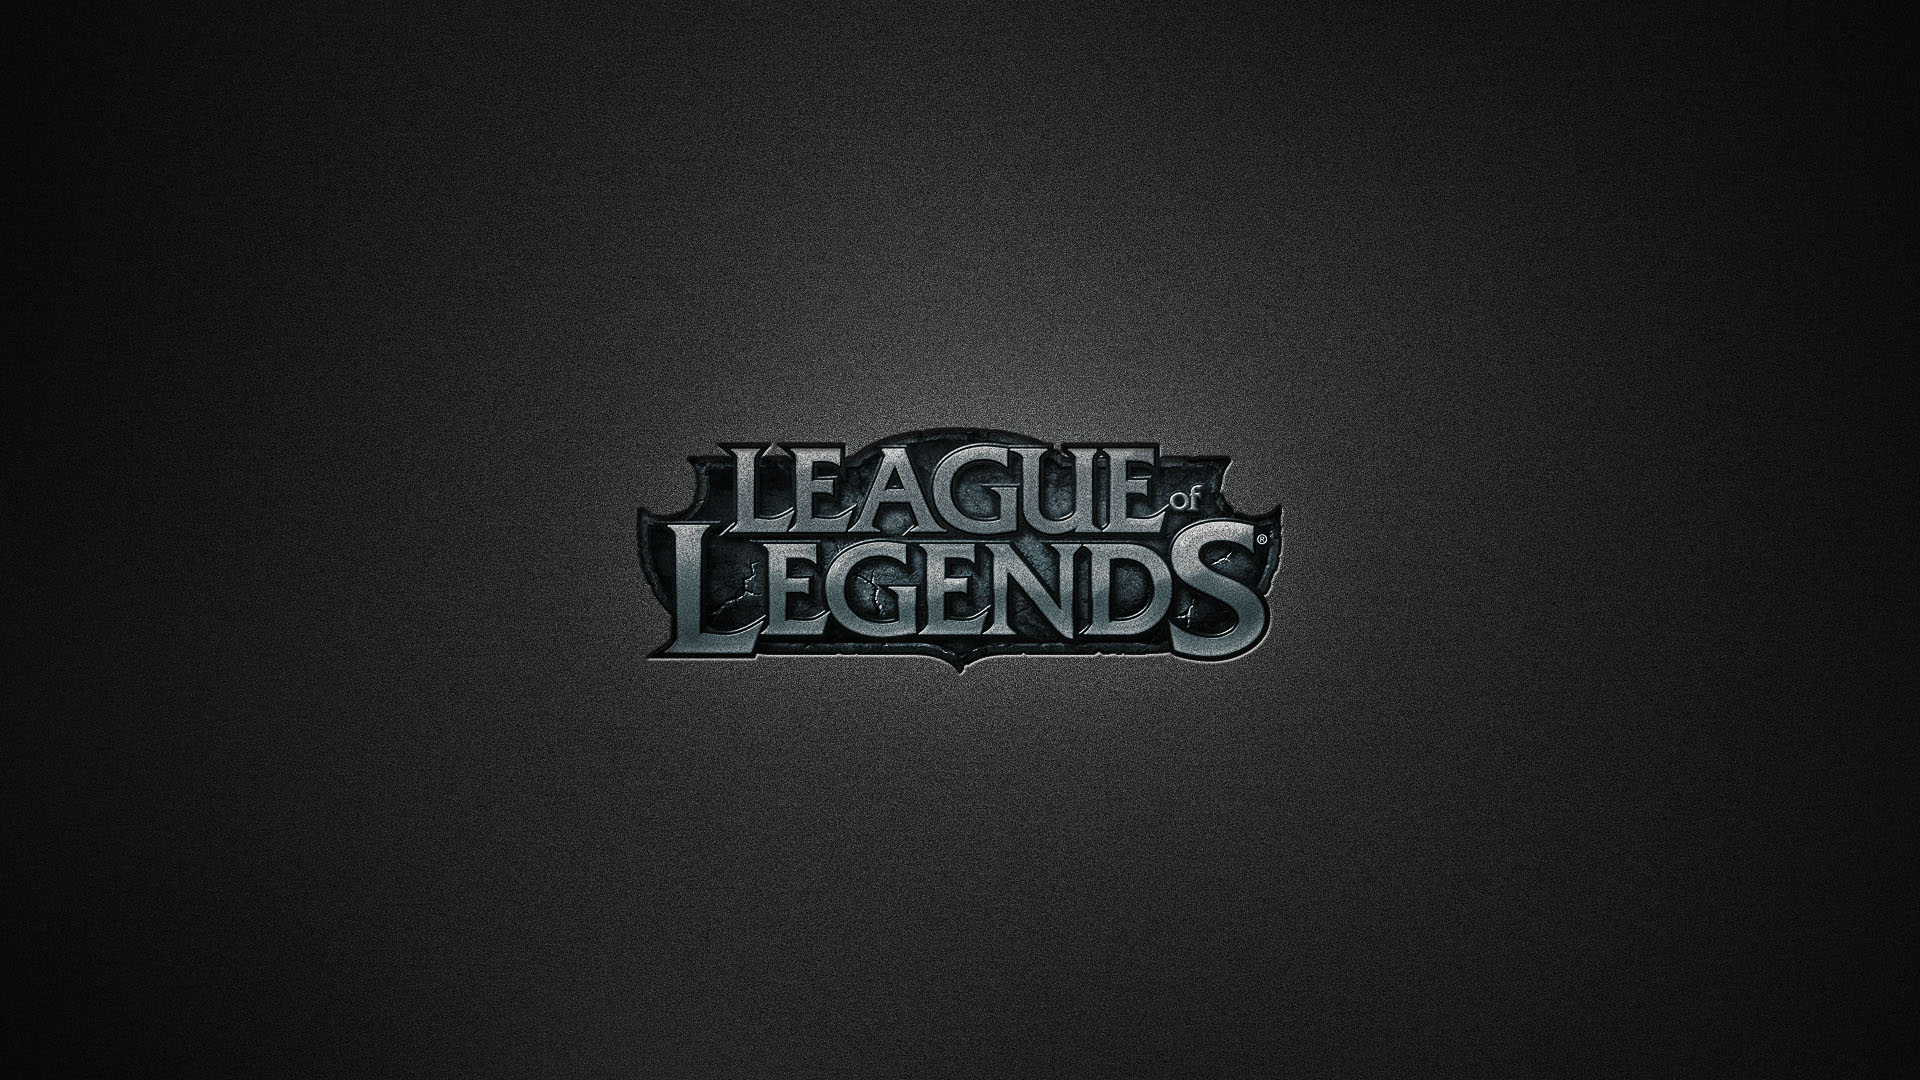 47+] League of Legends Logo Wallpaper - WallpaperSafari